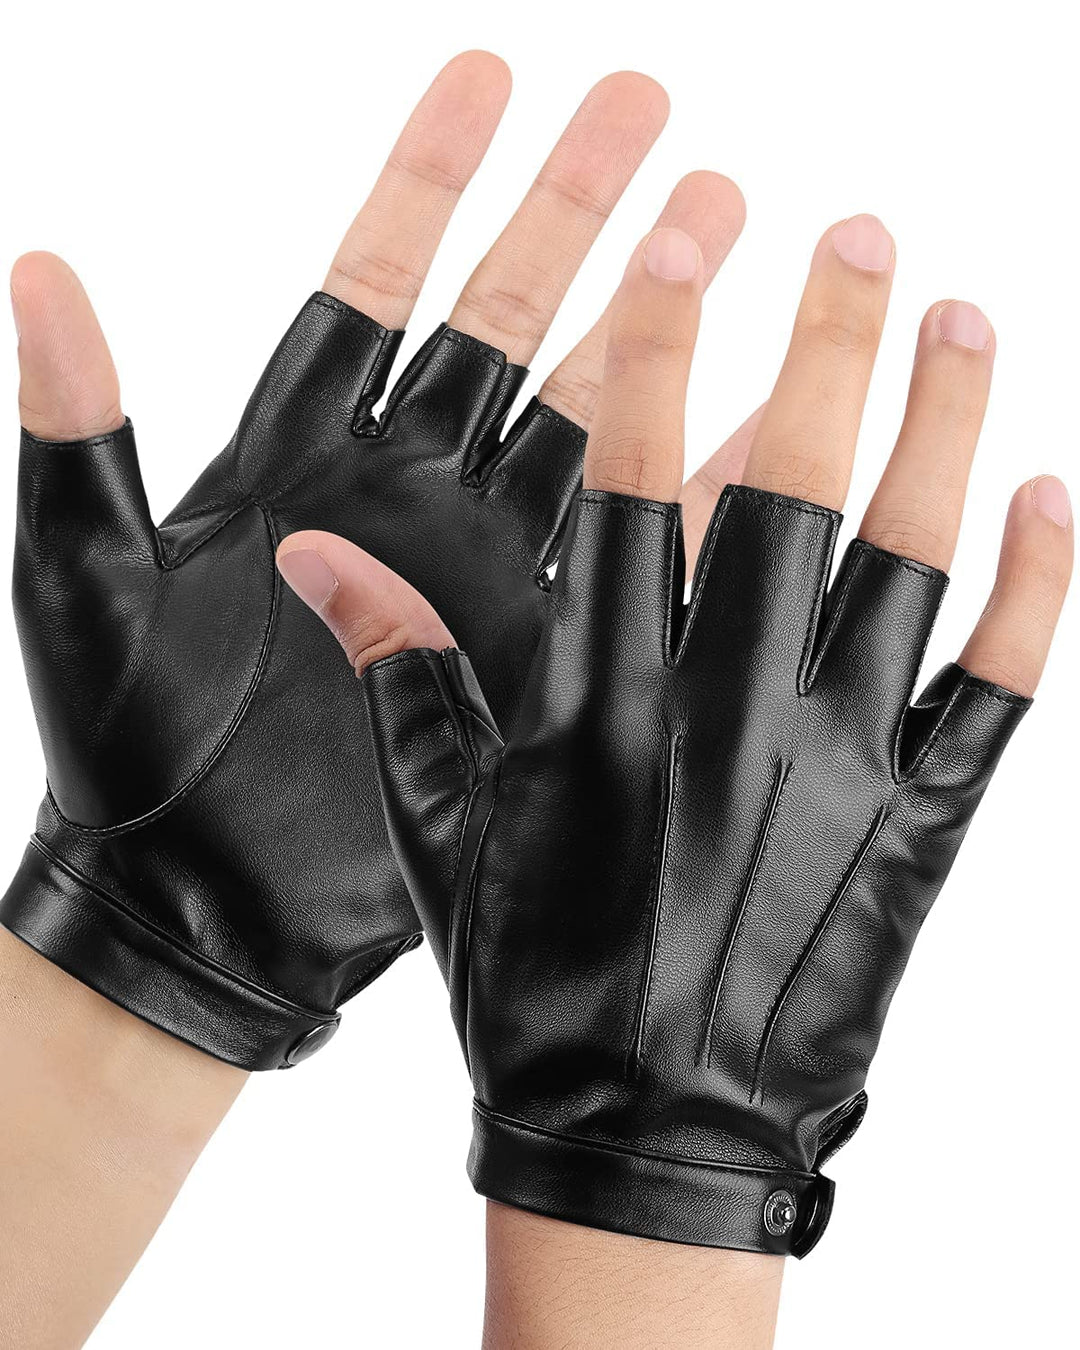 Fingerless Driving Gloves, PU Faux Leather Half Finger Glove for Men Women Teens, L